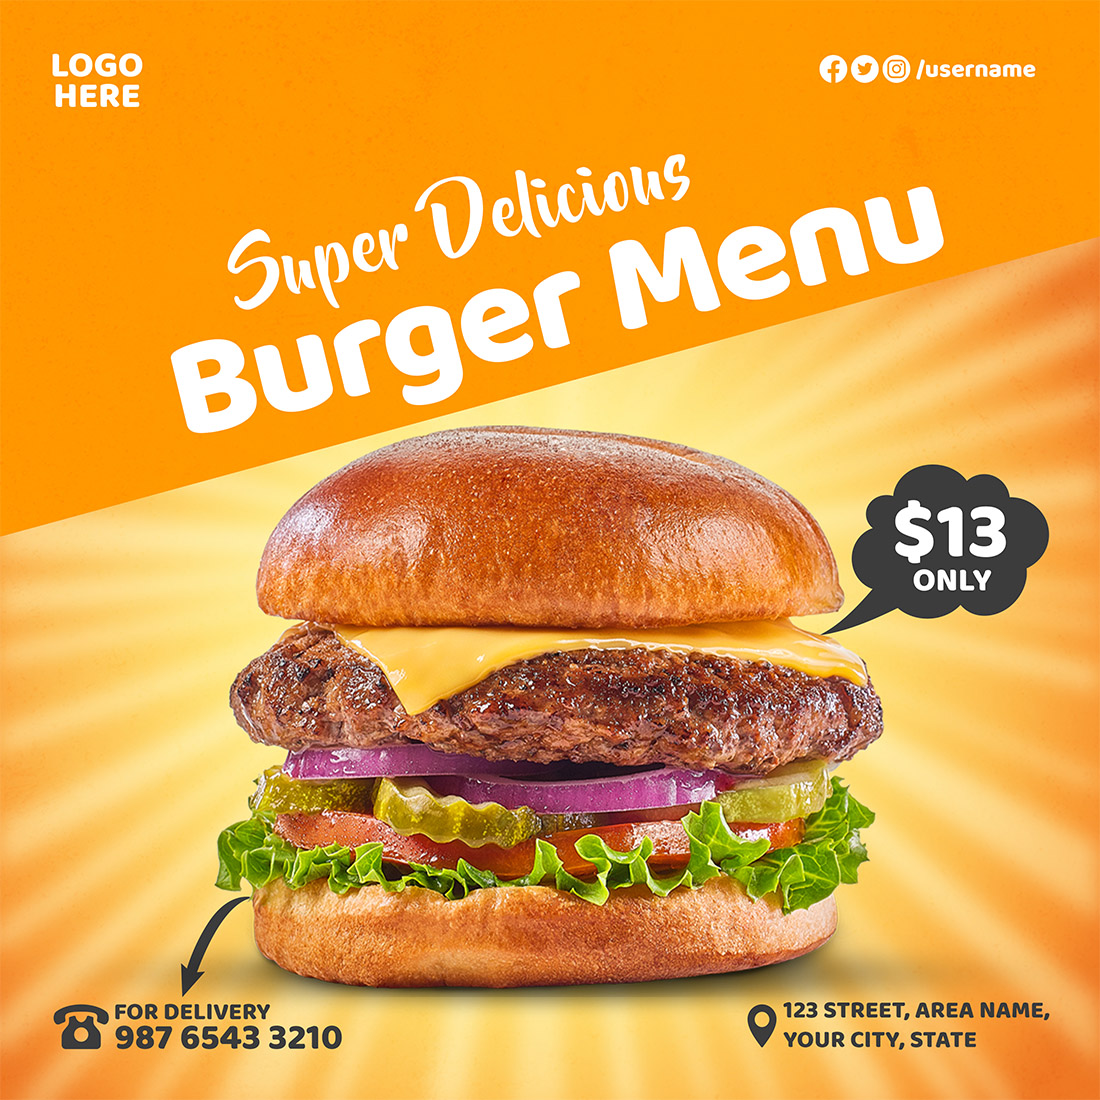 burger menu 689